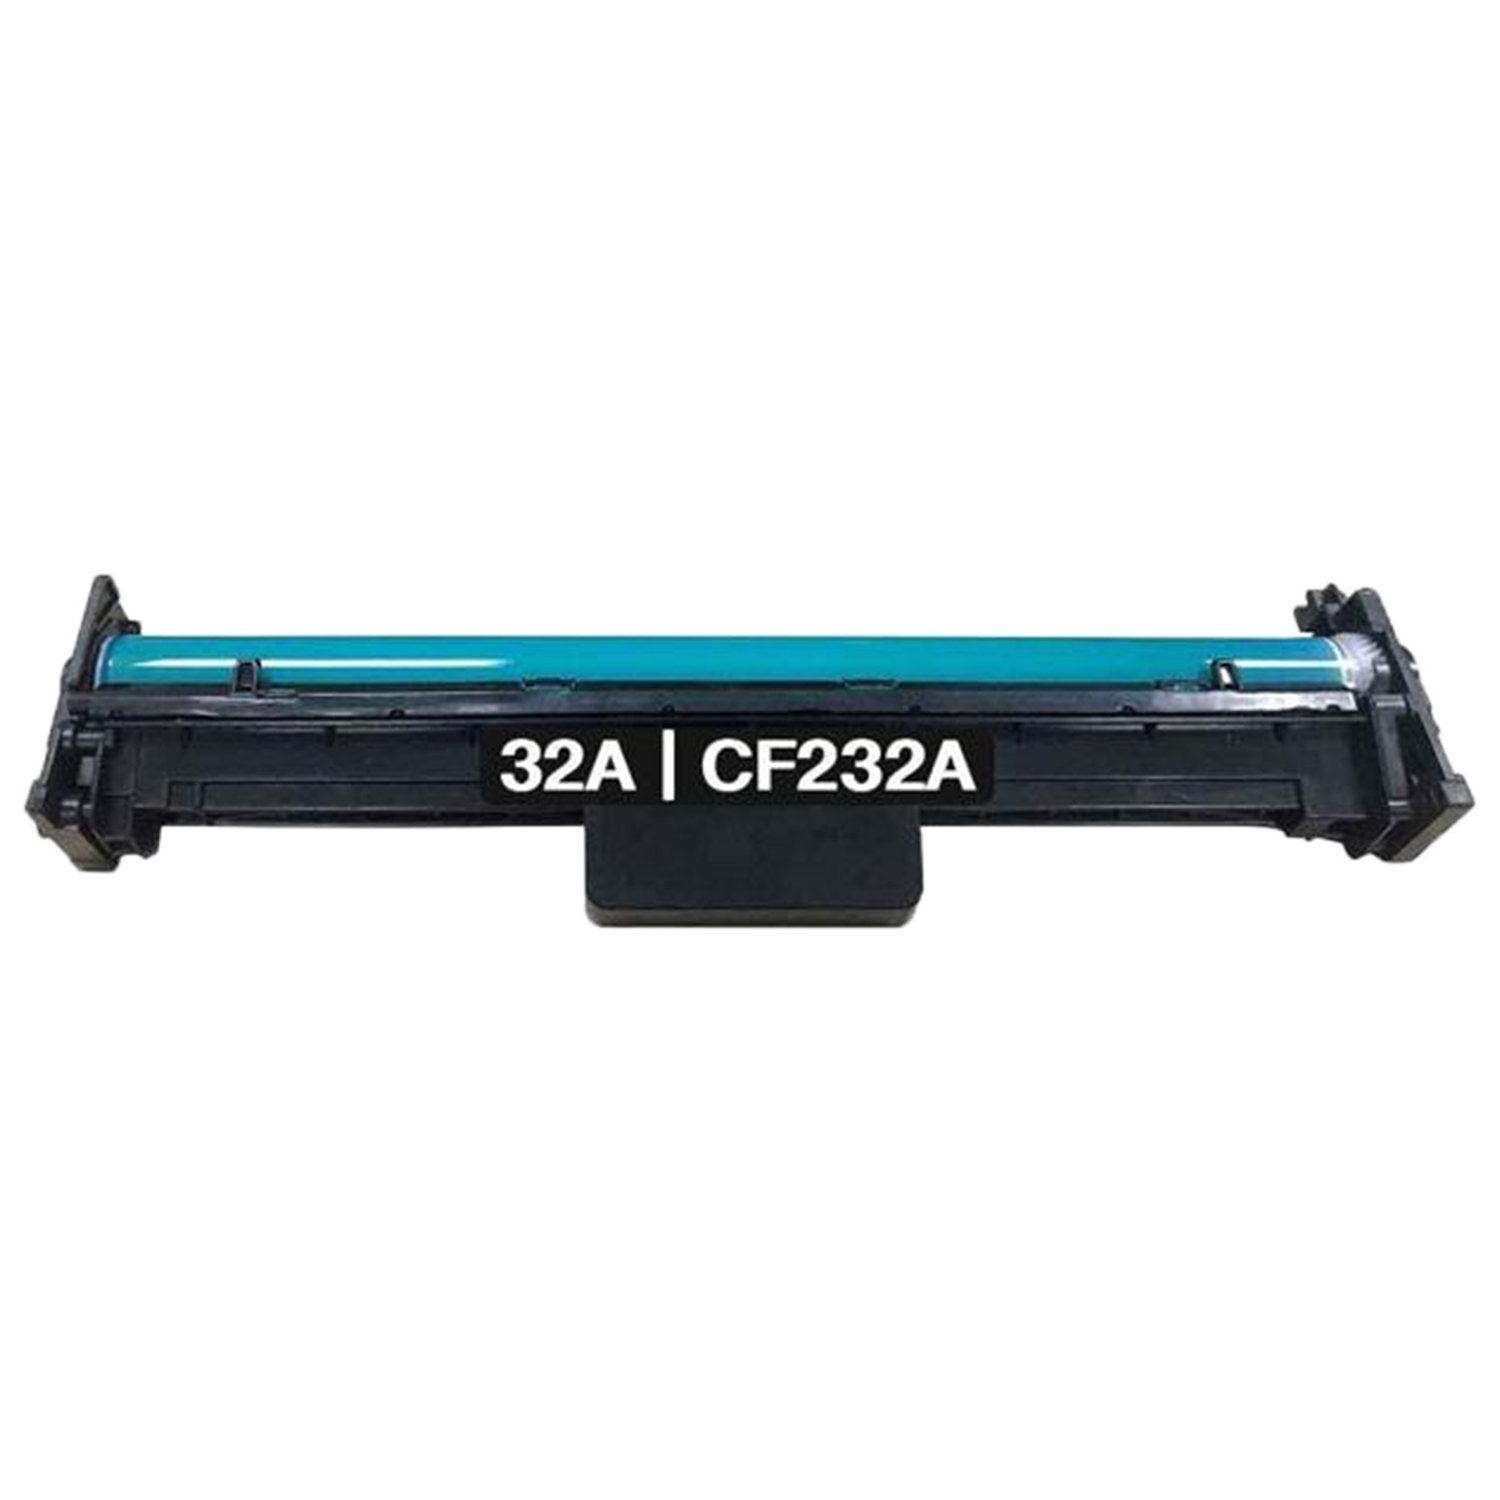 Absolute Toner Compatible CF232A HP 32A Black Drum Toner Cartridge | Absolute Toner HP Toner Cartridges